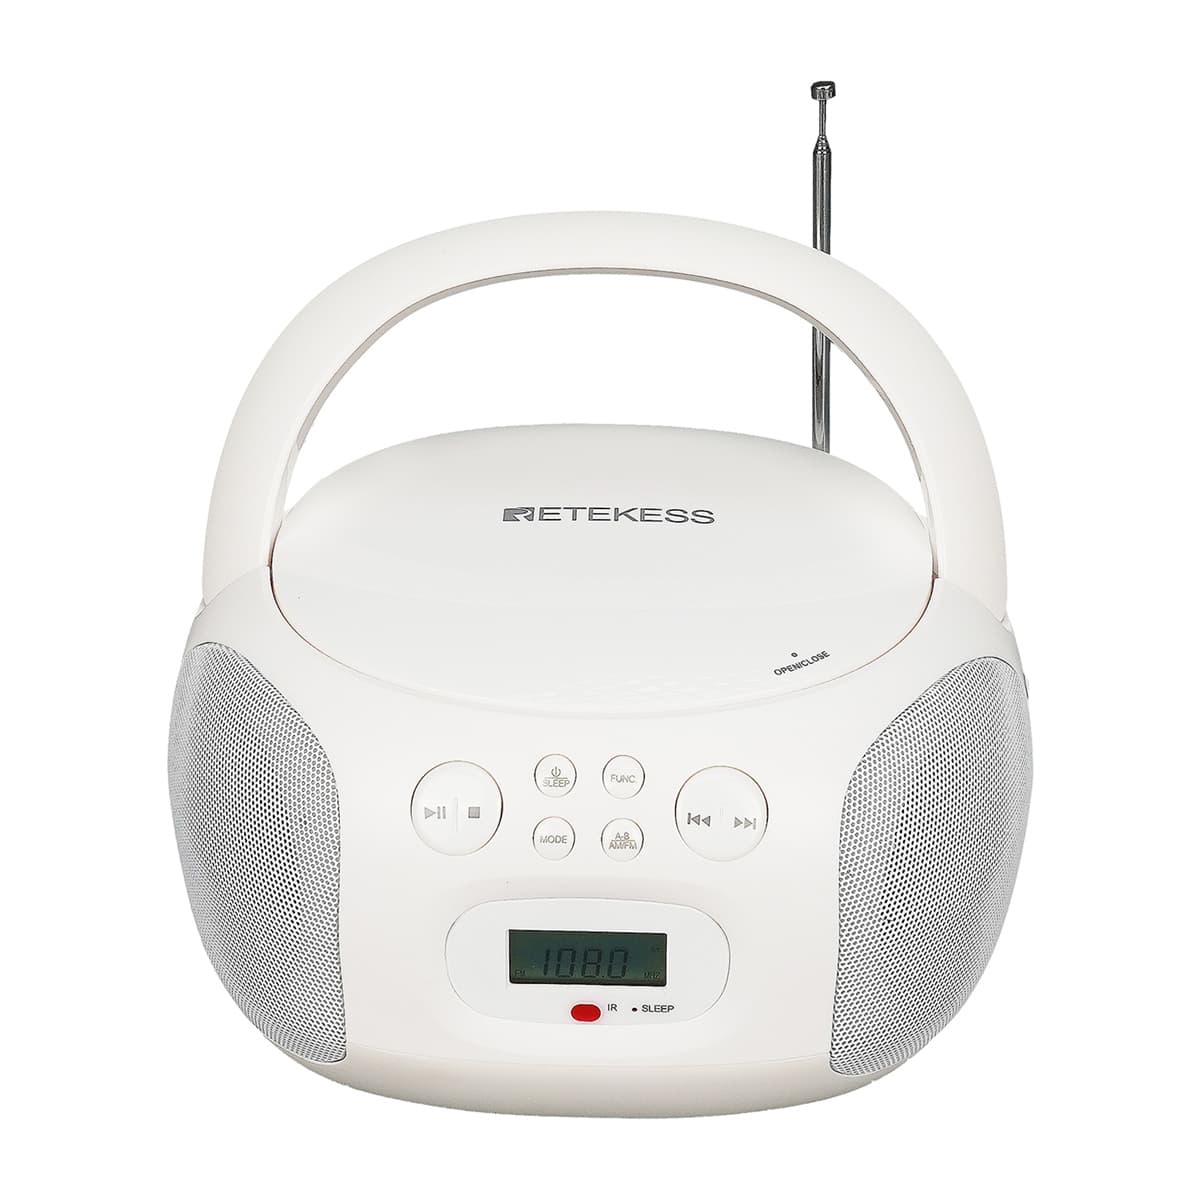 Retekess TR631 Stereo FM Radio Portable CD player, Receive DAB Station,  Support USB, CD, AUX, European Version